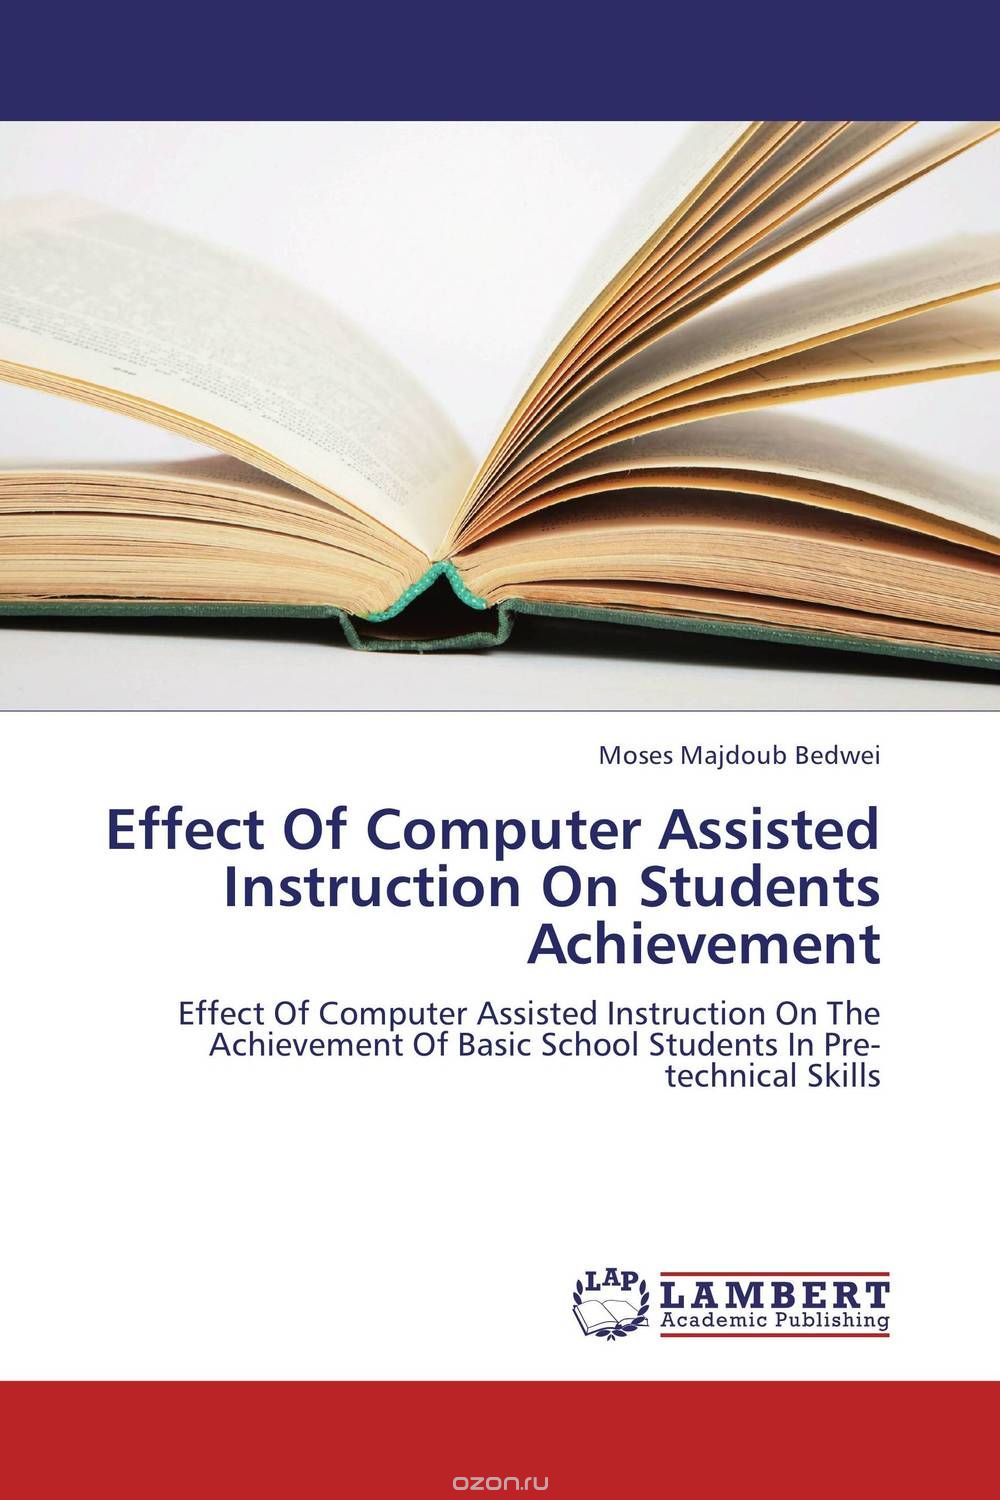 Скачать книгу "Effect Of Computer Assisted Instruction On Students Achievement"